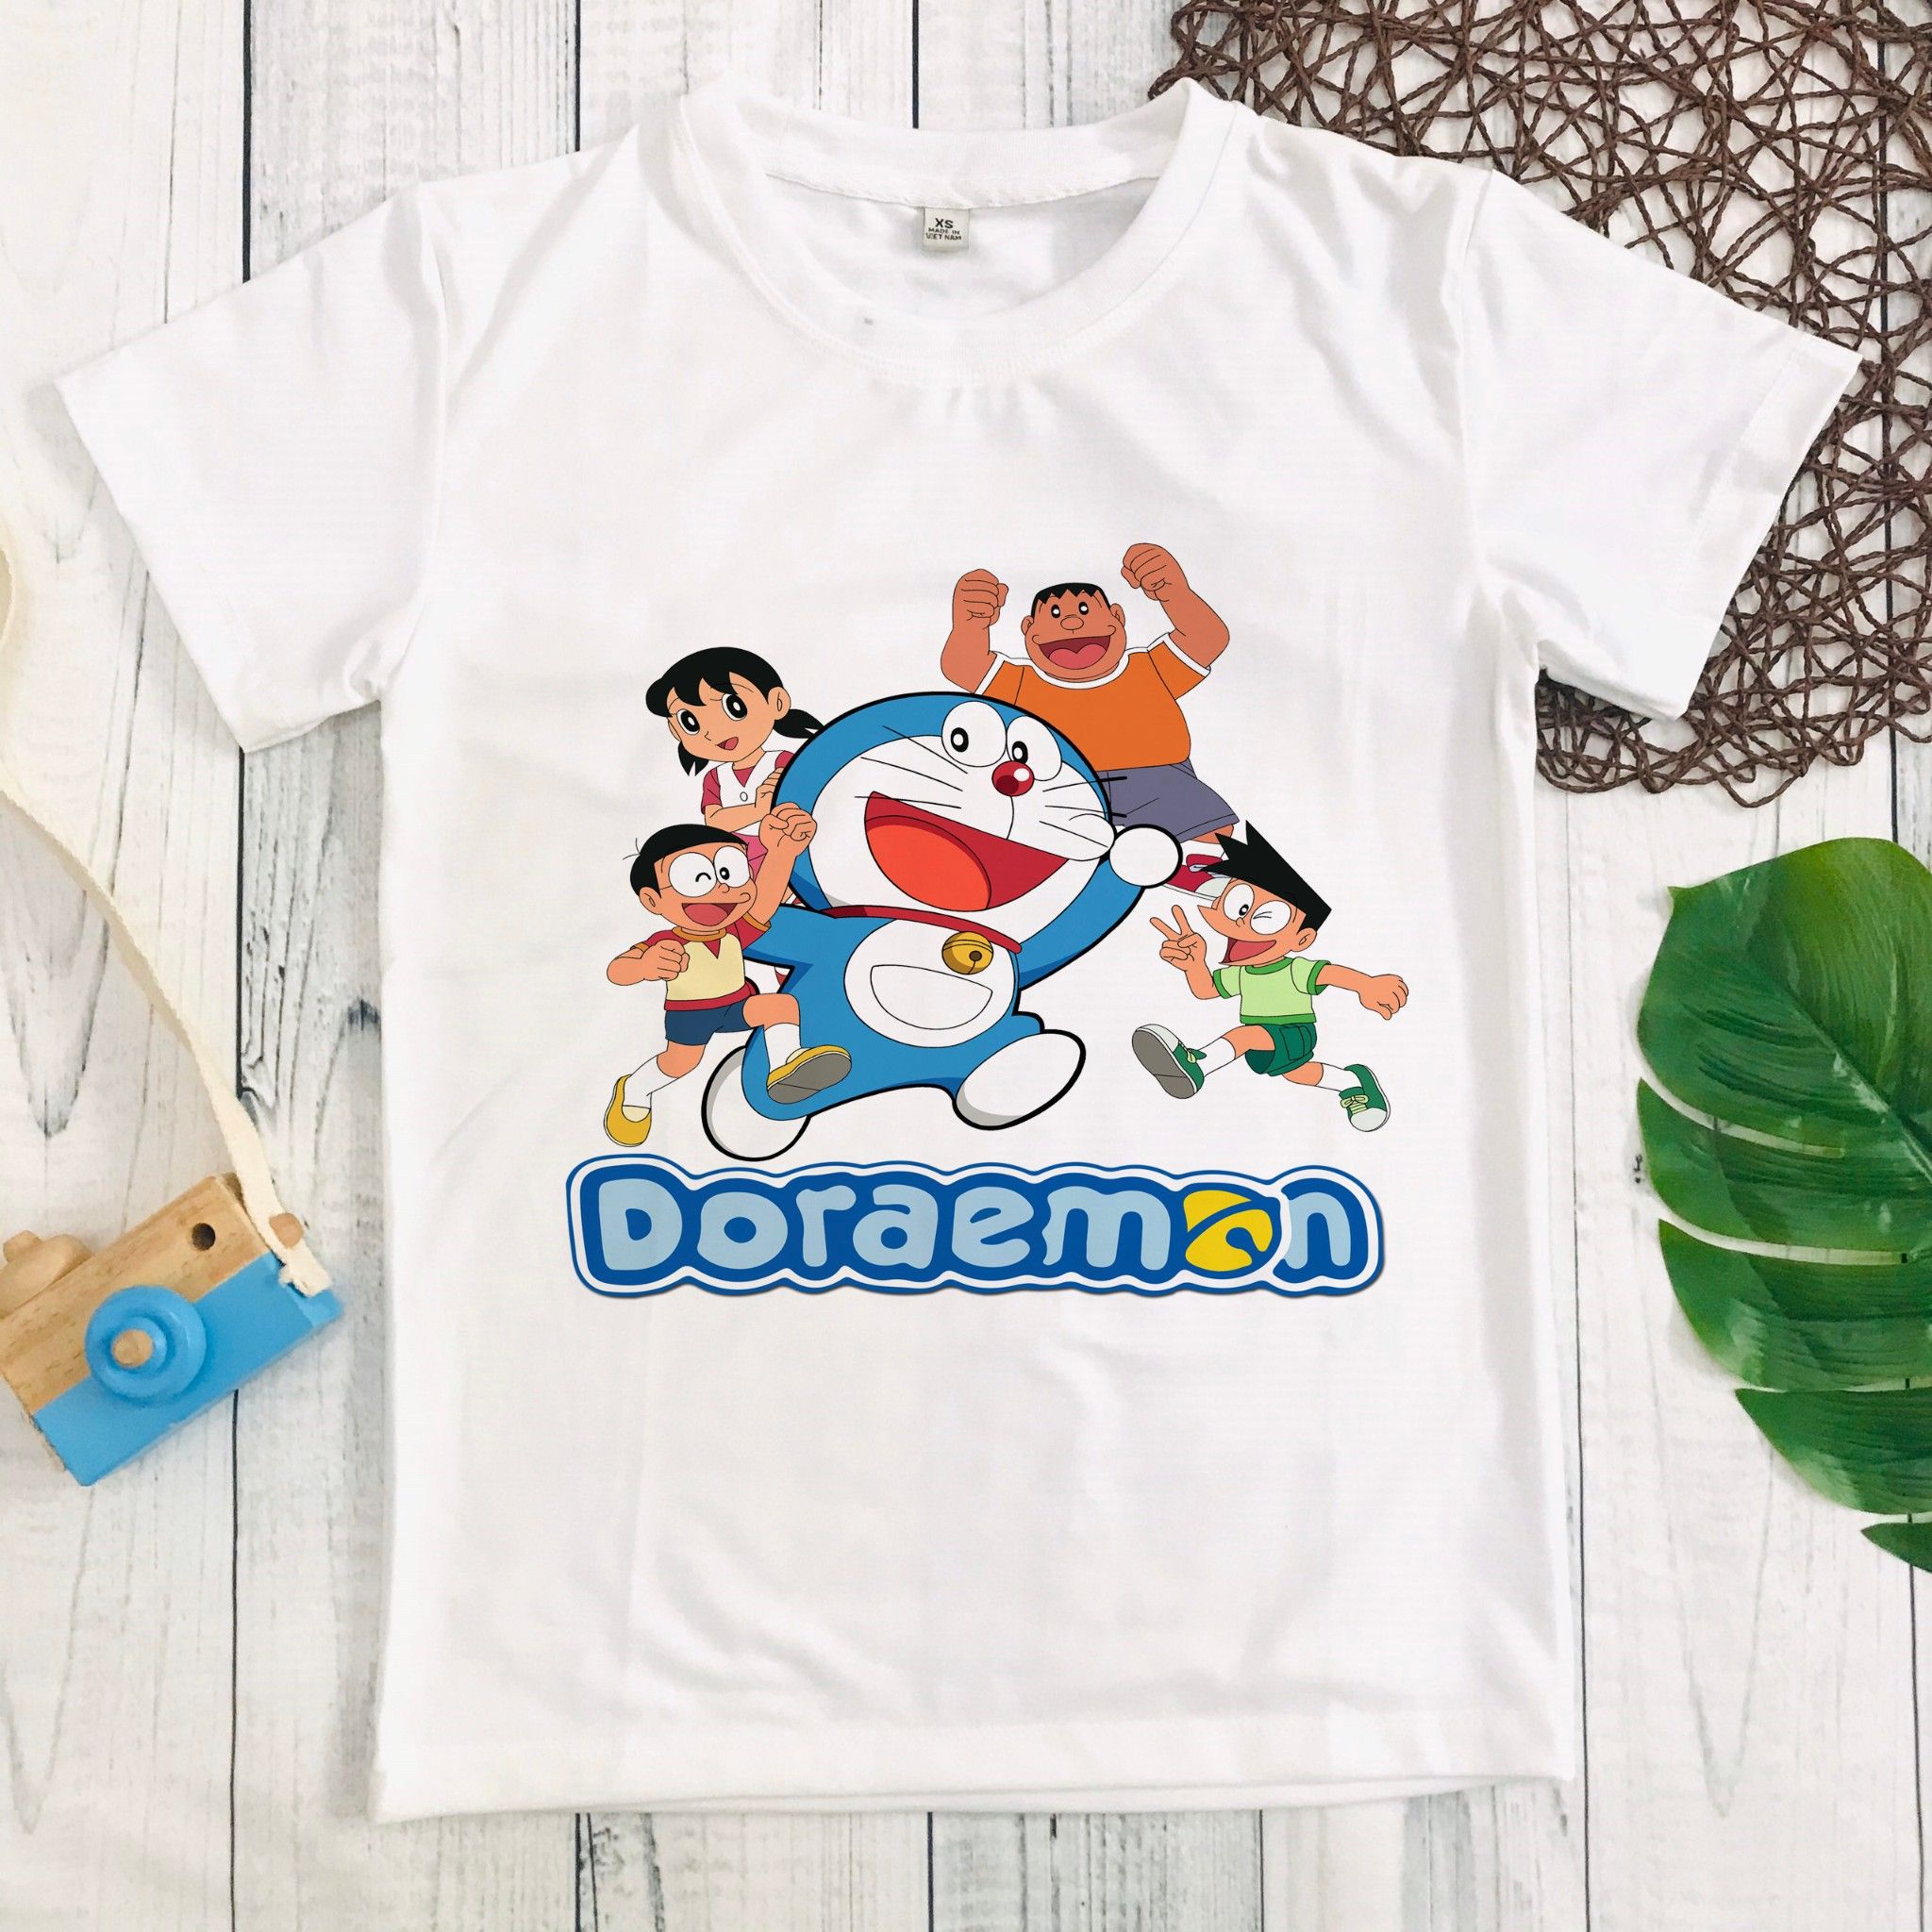  Áo thun Doraemon cho bé 